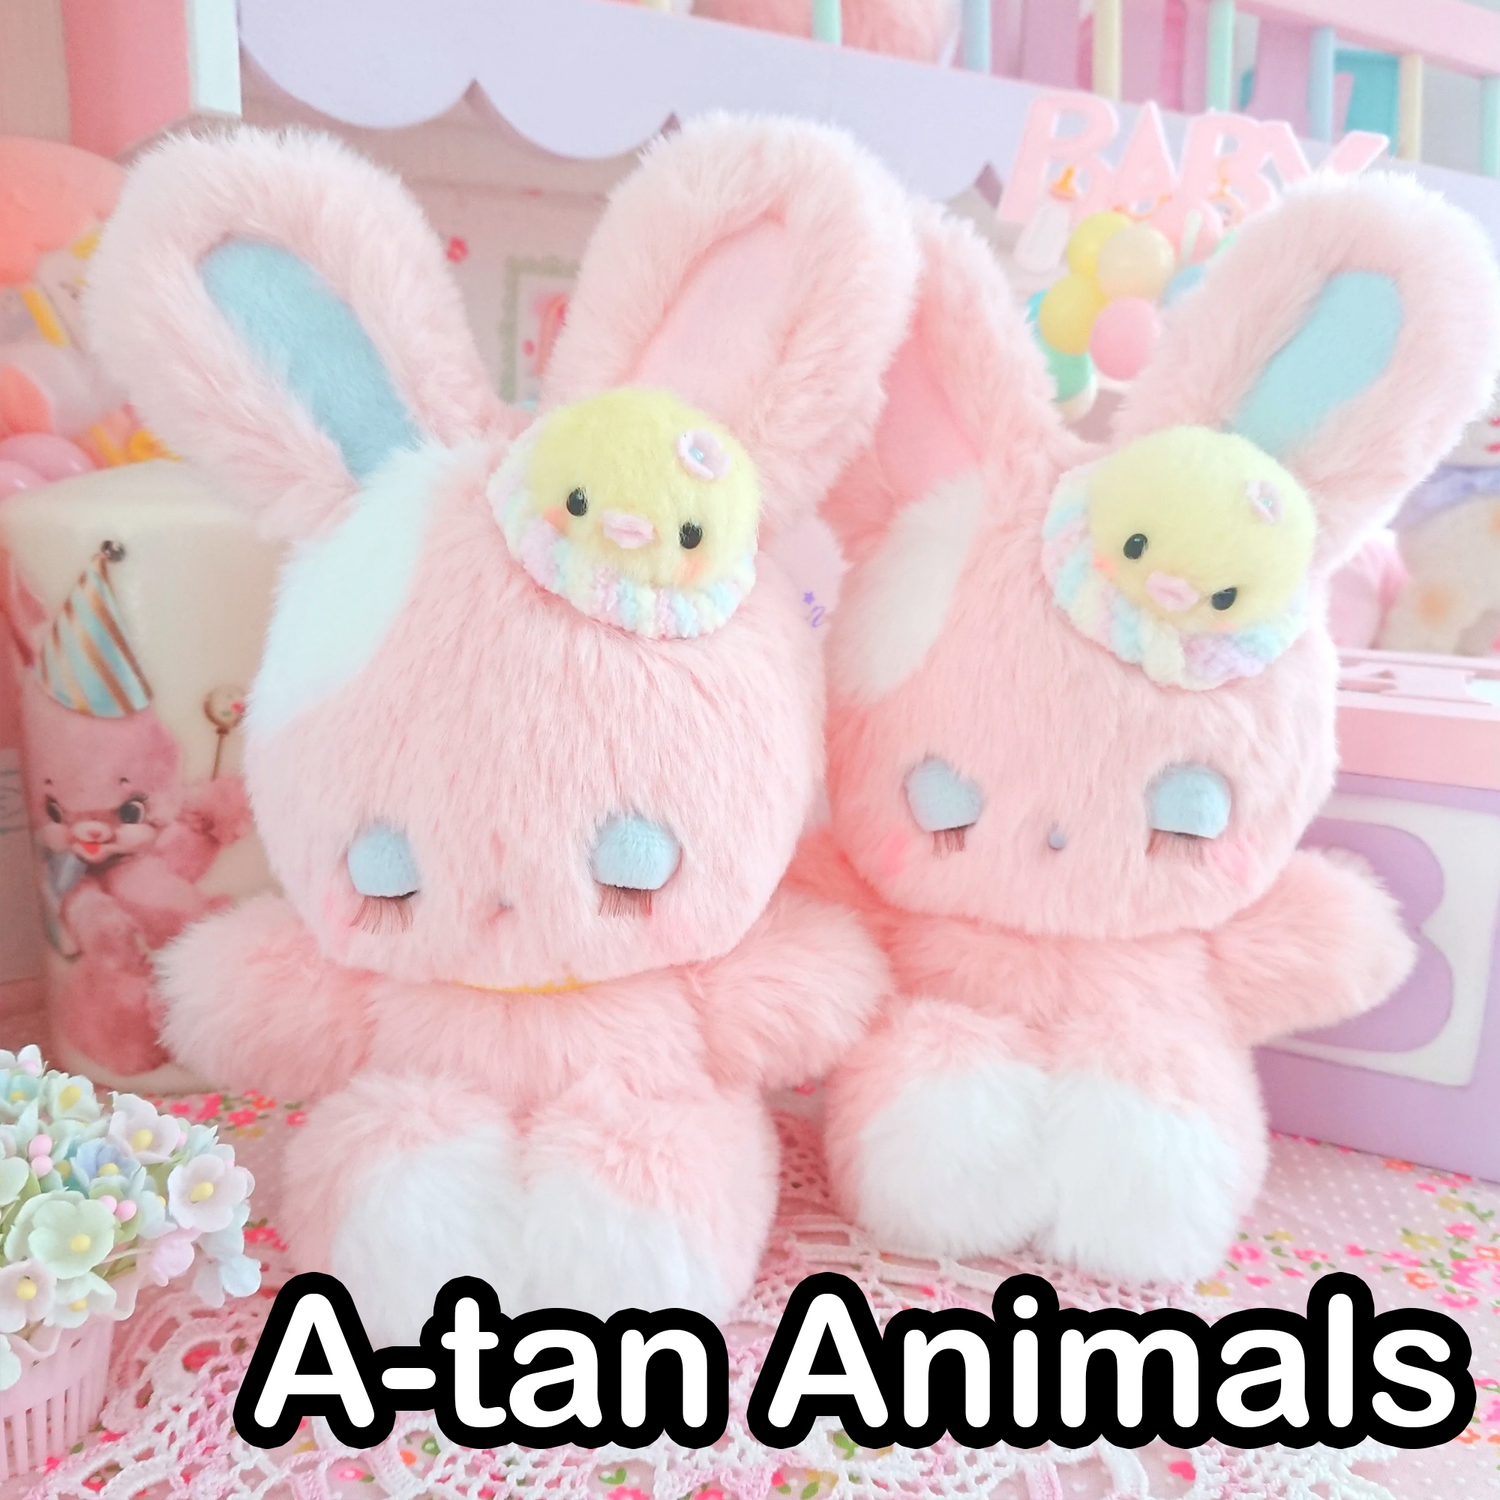 A-tan Animals